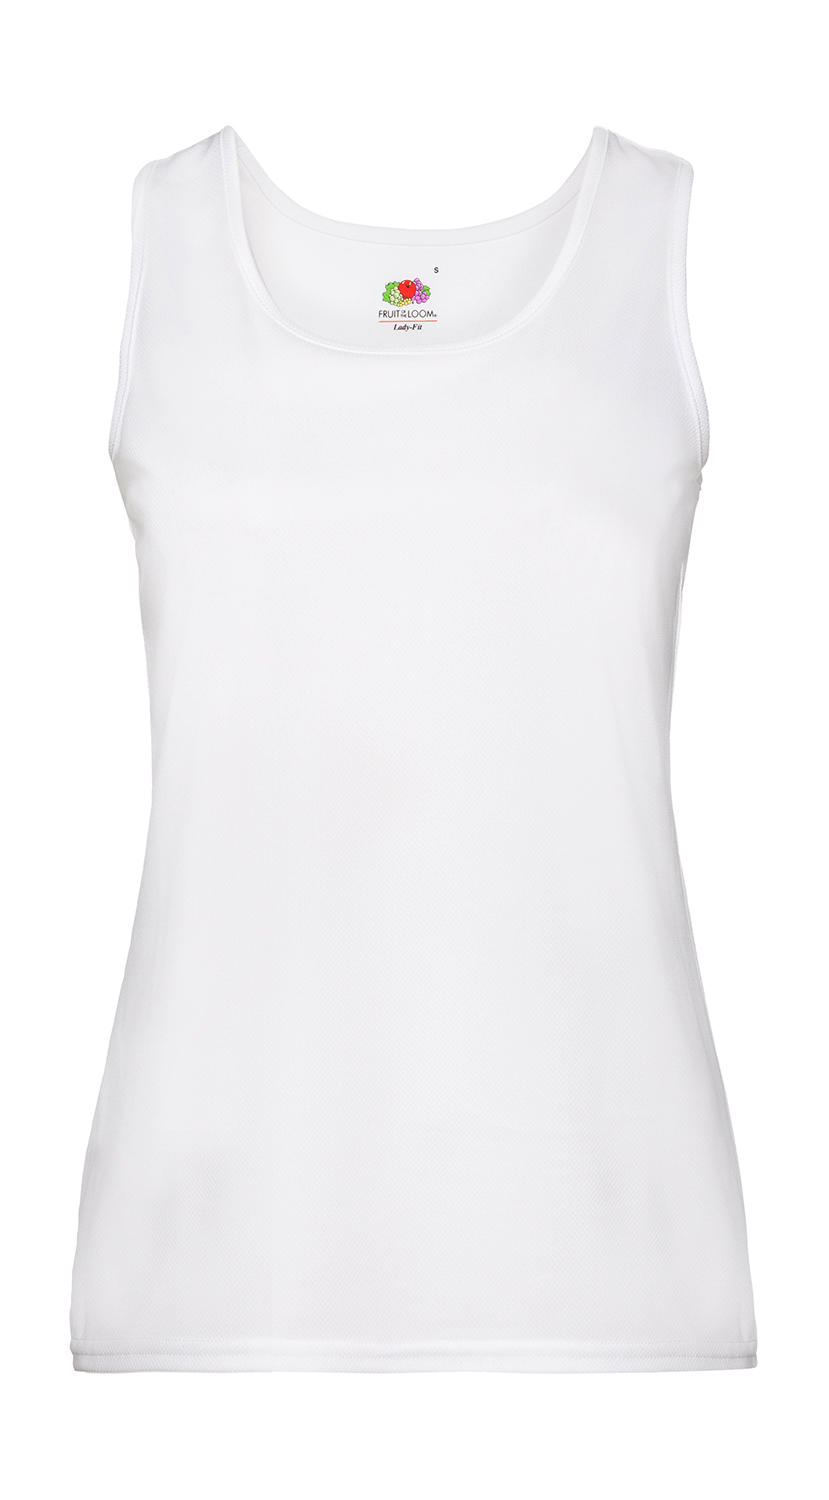  Ladies Performance Vest in Farbe White